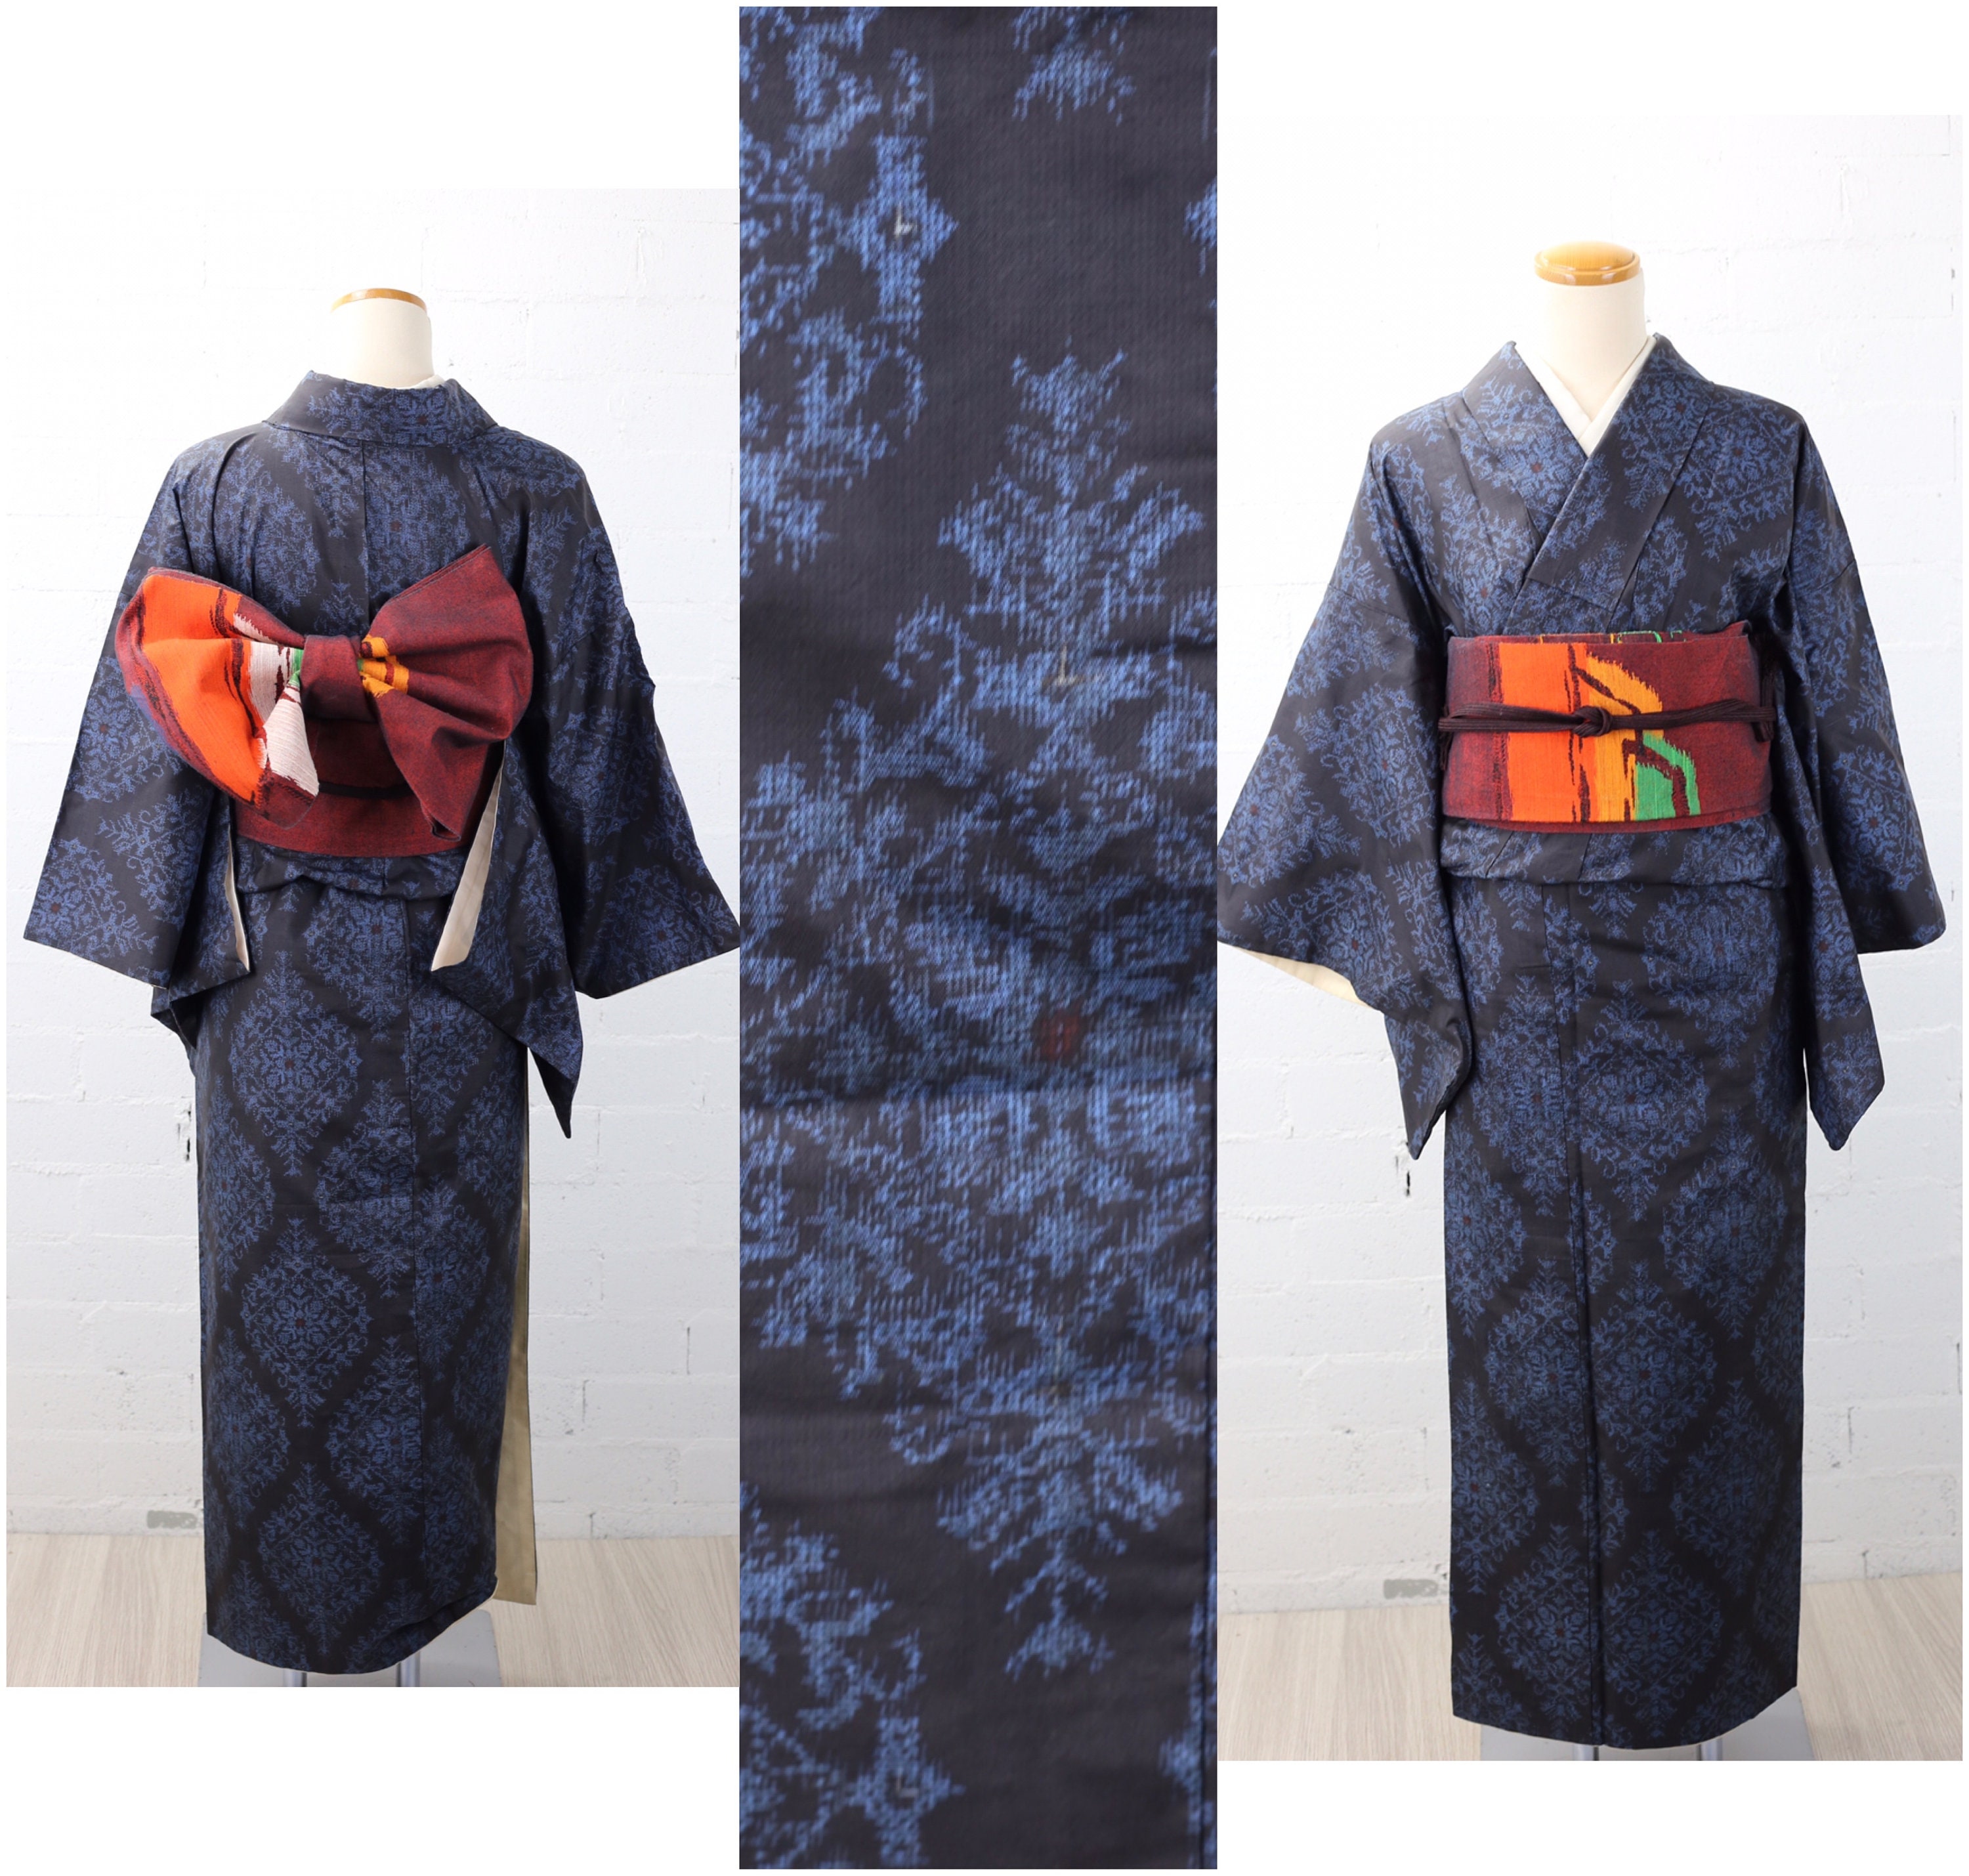 Oshima Tsumugi HAORI and KIMONO elastic waist pants(large size) upcycl –  MACHIKO KIMONO Japanese Kimonos, Vintage & Upcycled